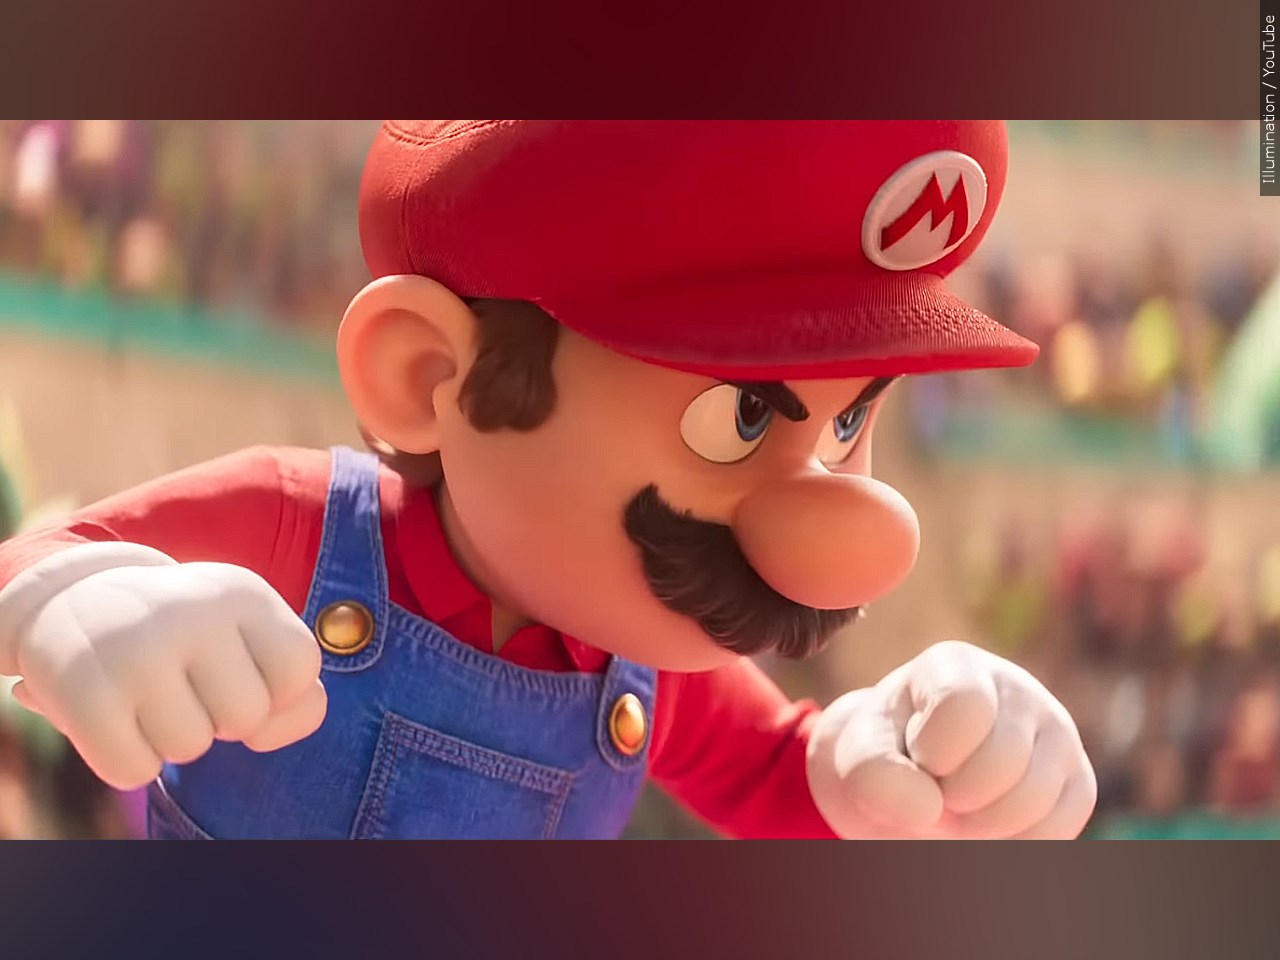 The Super Mario Bros. Movie' is a box office smash